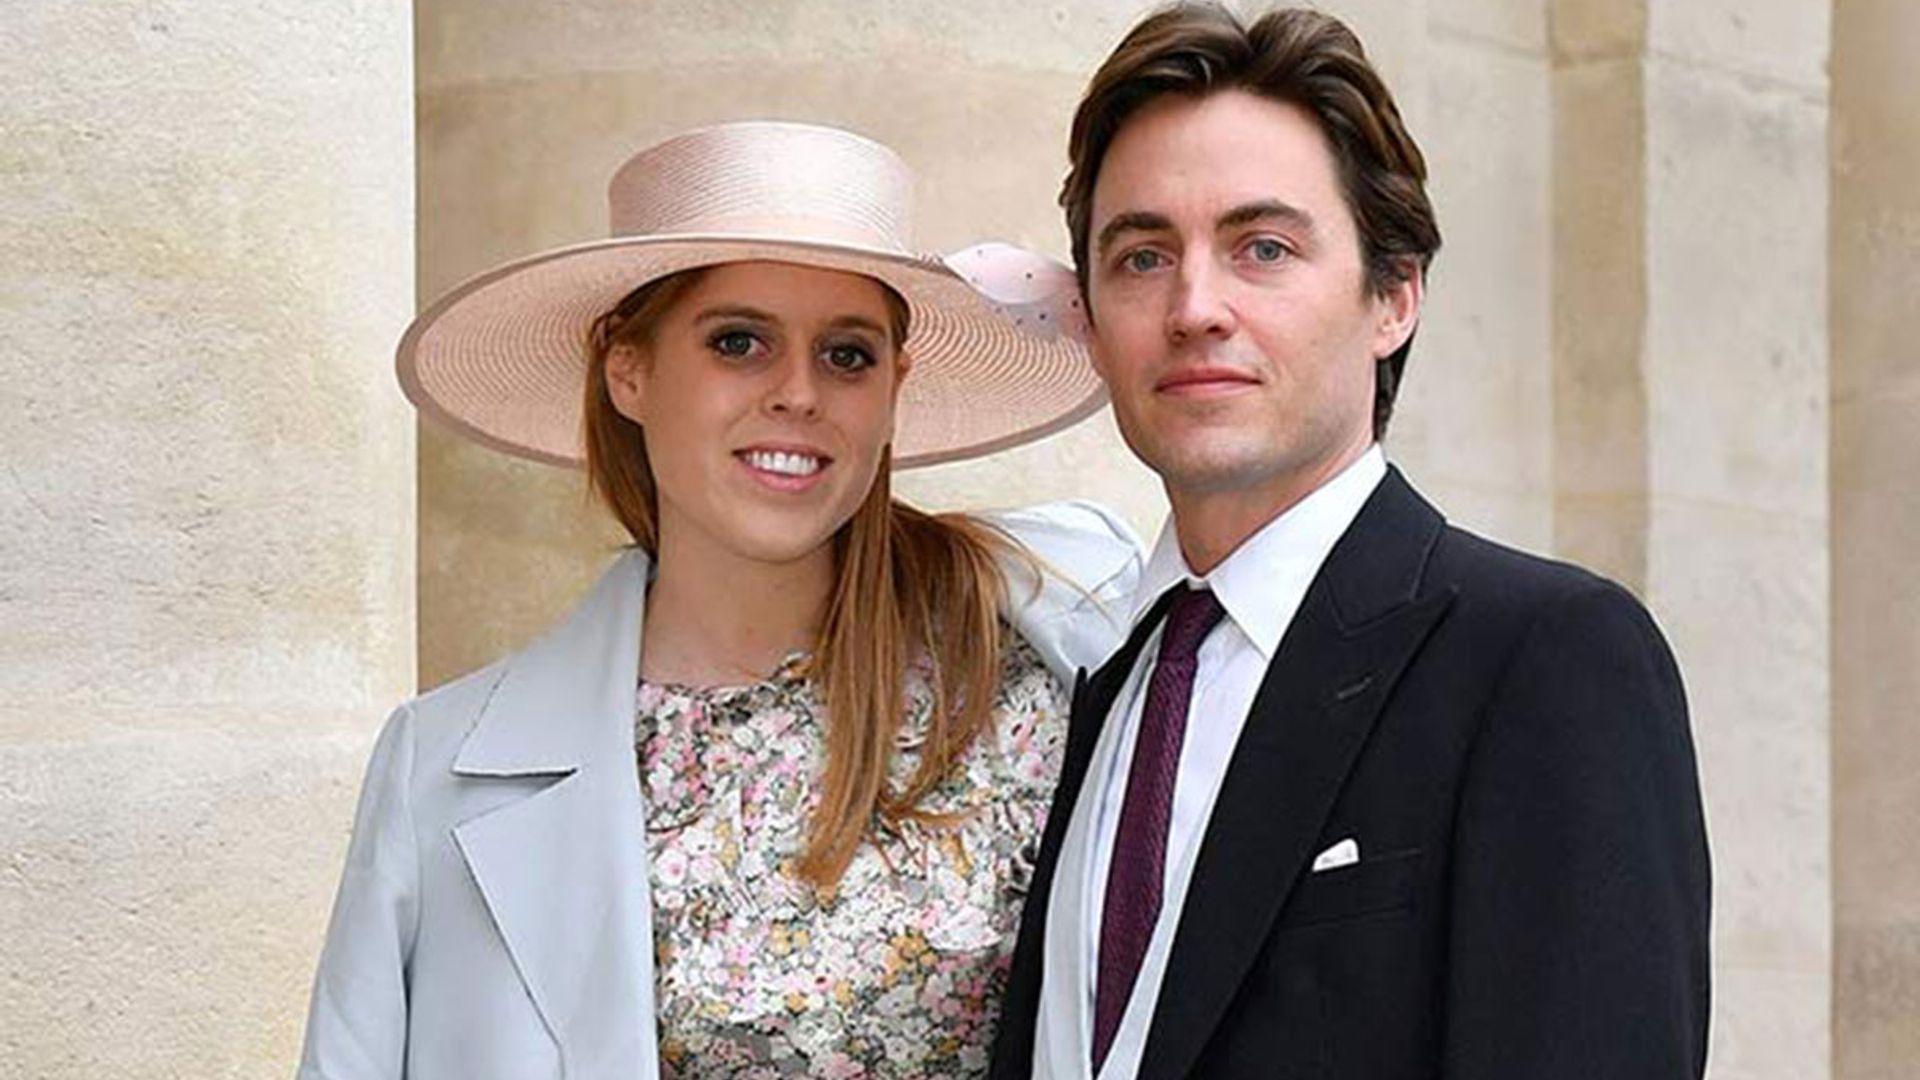 Princess Beatrice and Edoardo Mapelli Mozzi christen baby daughter Sienna – details